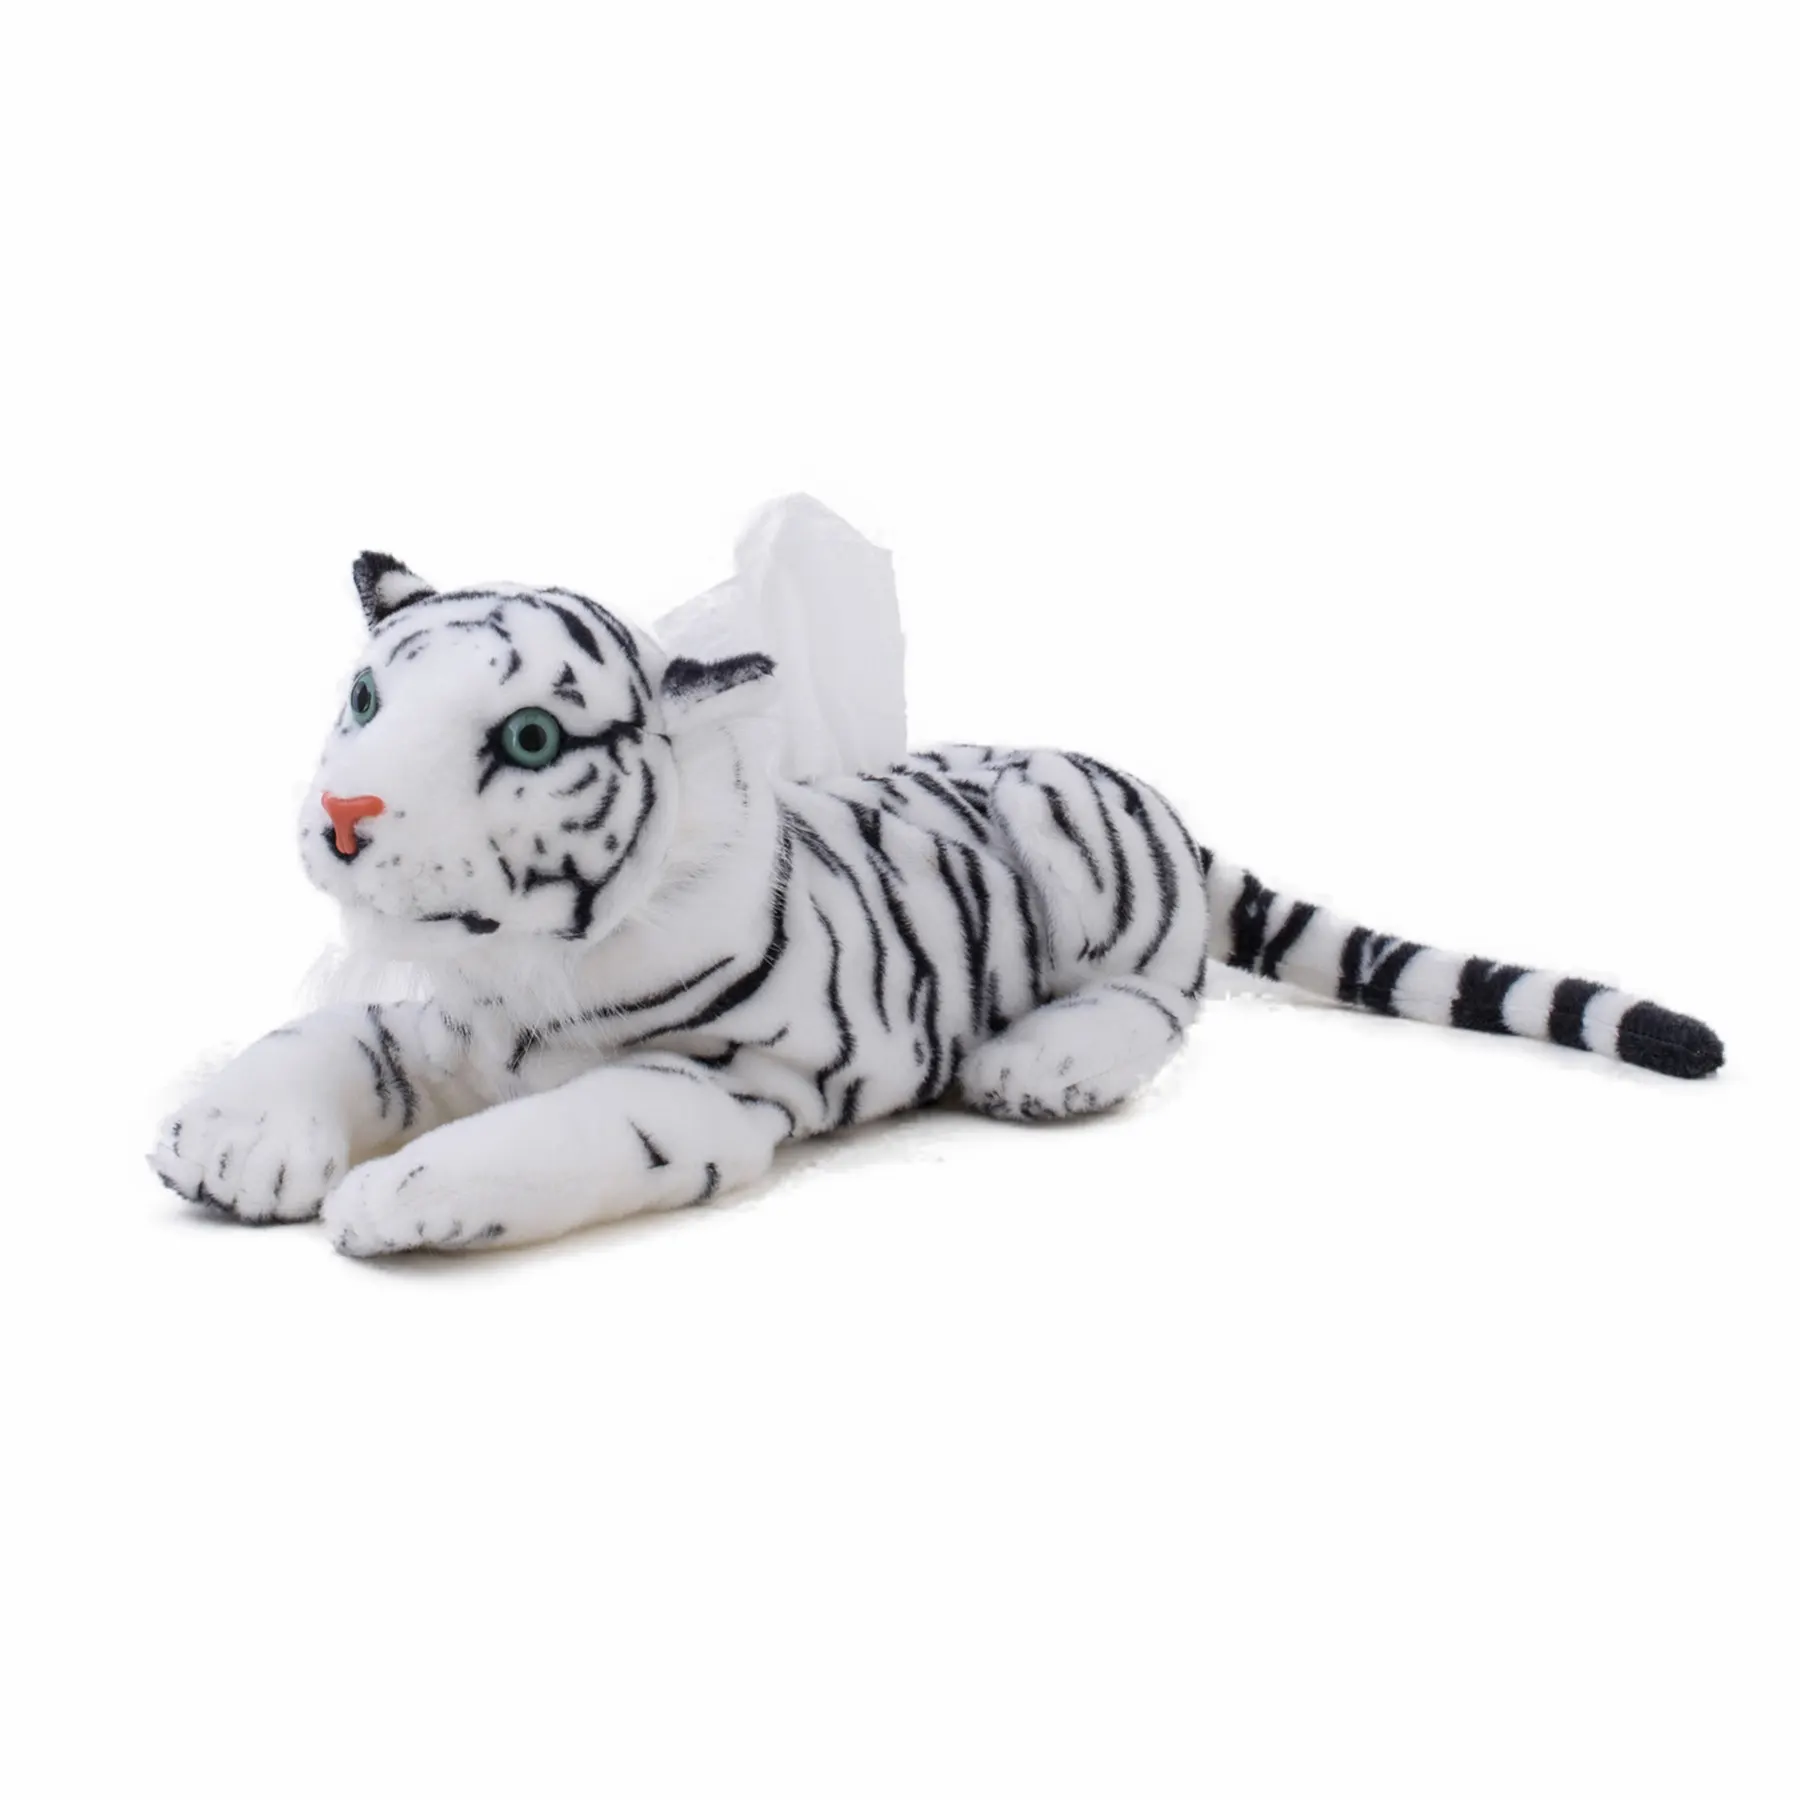 10'' Tiger Plush Animal Realistic Big White Tiger Hairy Soft Stuffed Toy Pillow 